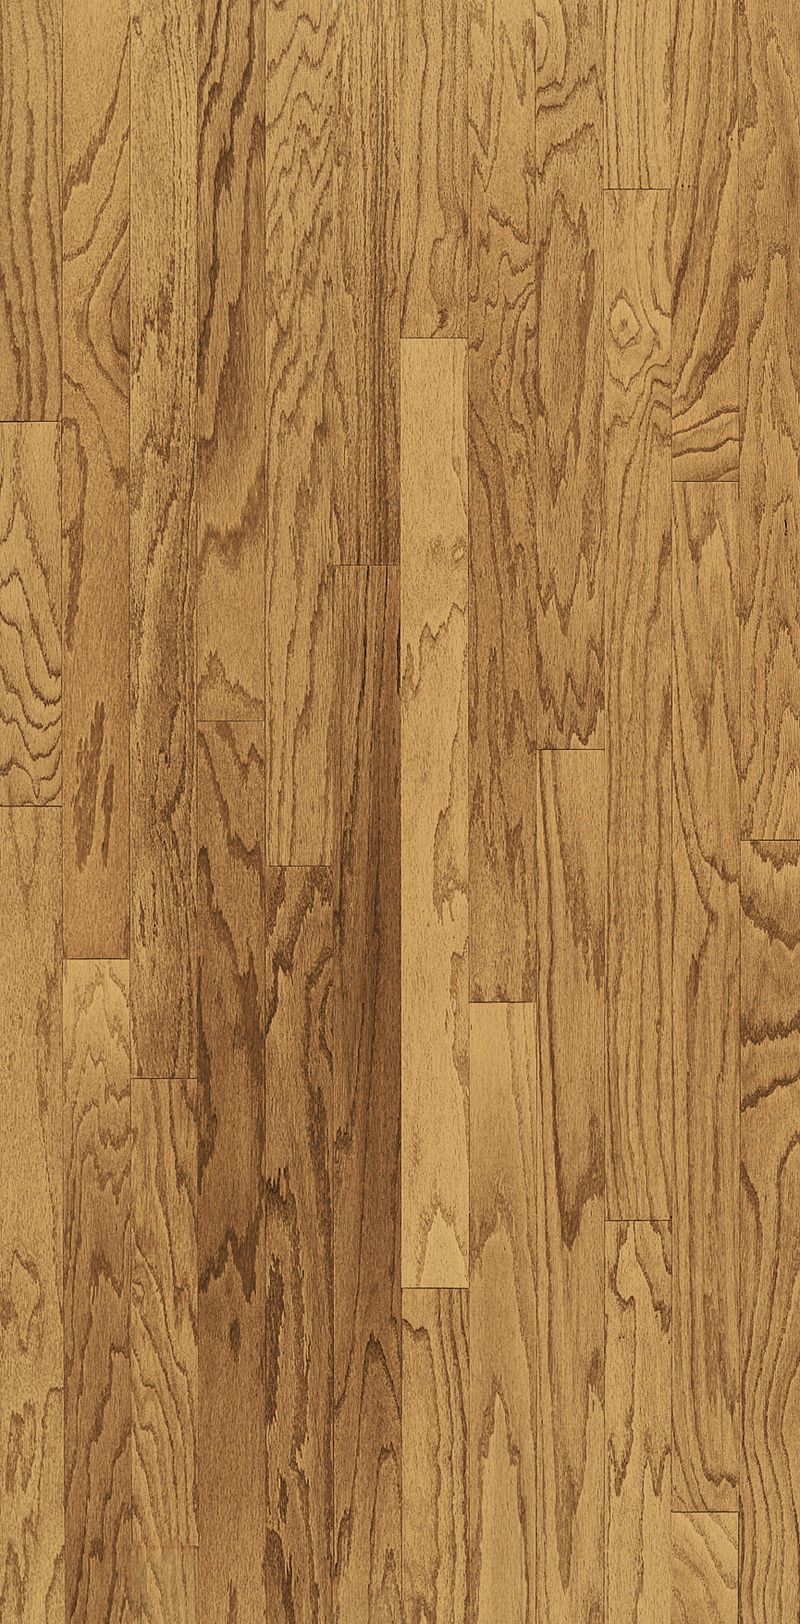 Harvest 3" - Turlington Collection - Engineered Hardwood Flooring by Bruce - Hardwood by Bruce Hardwood